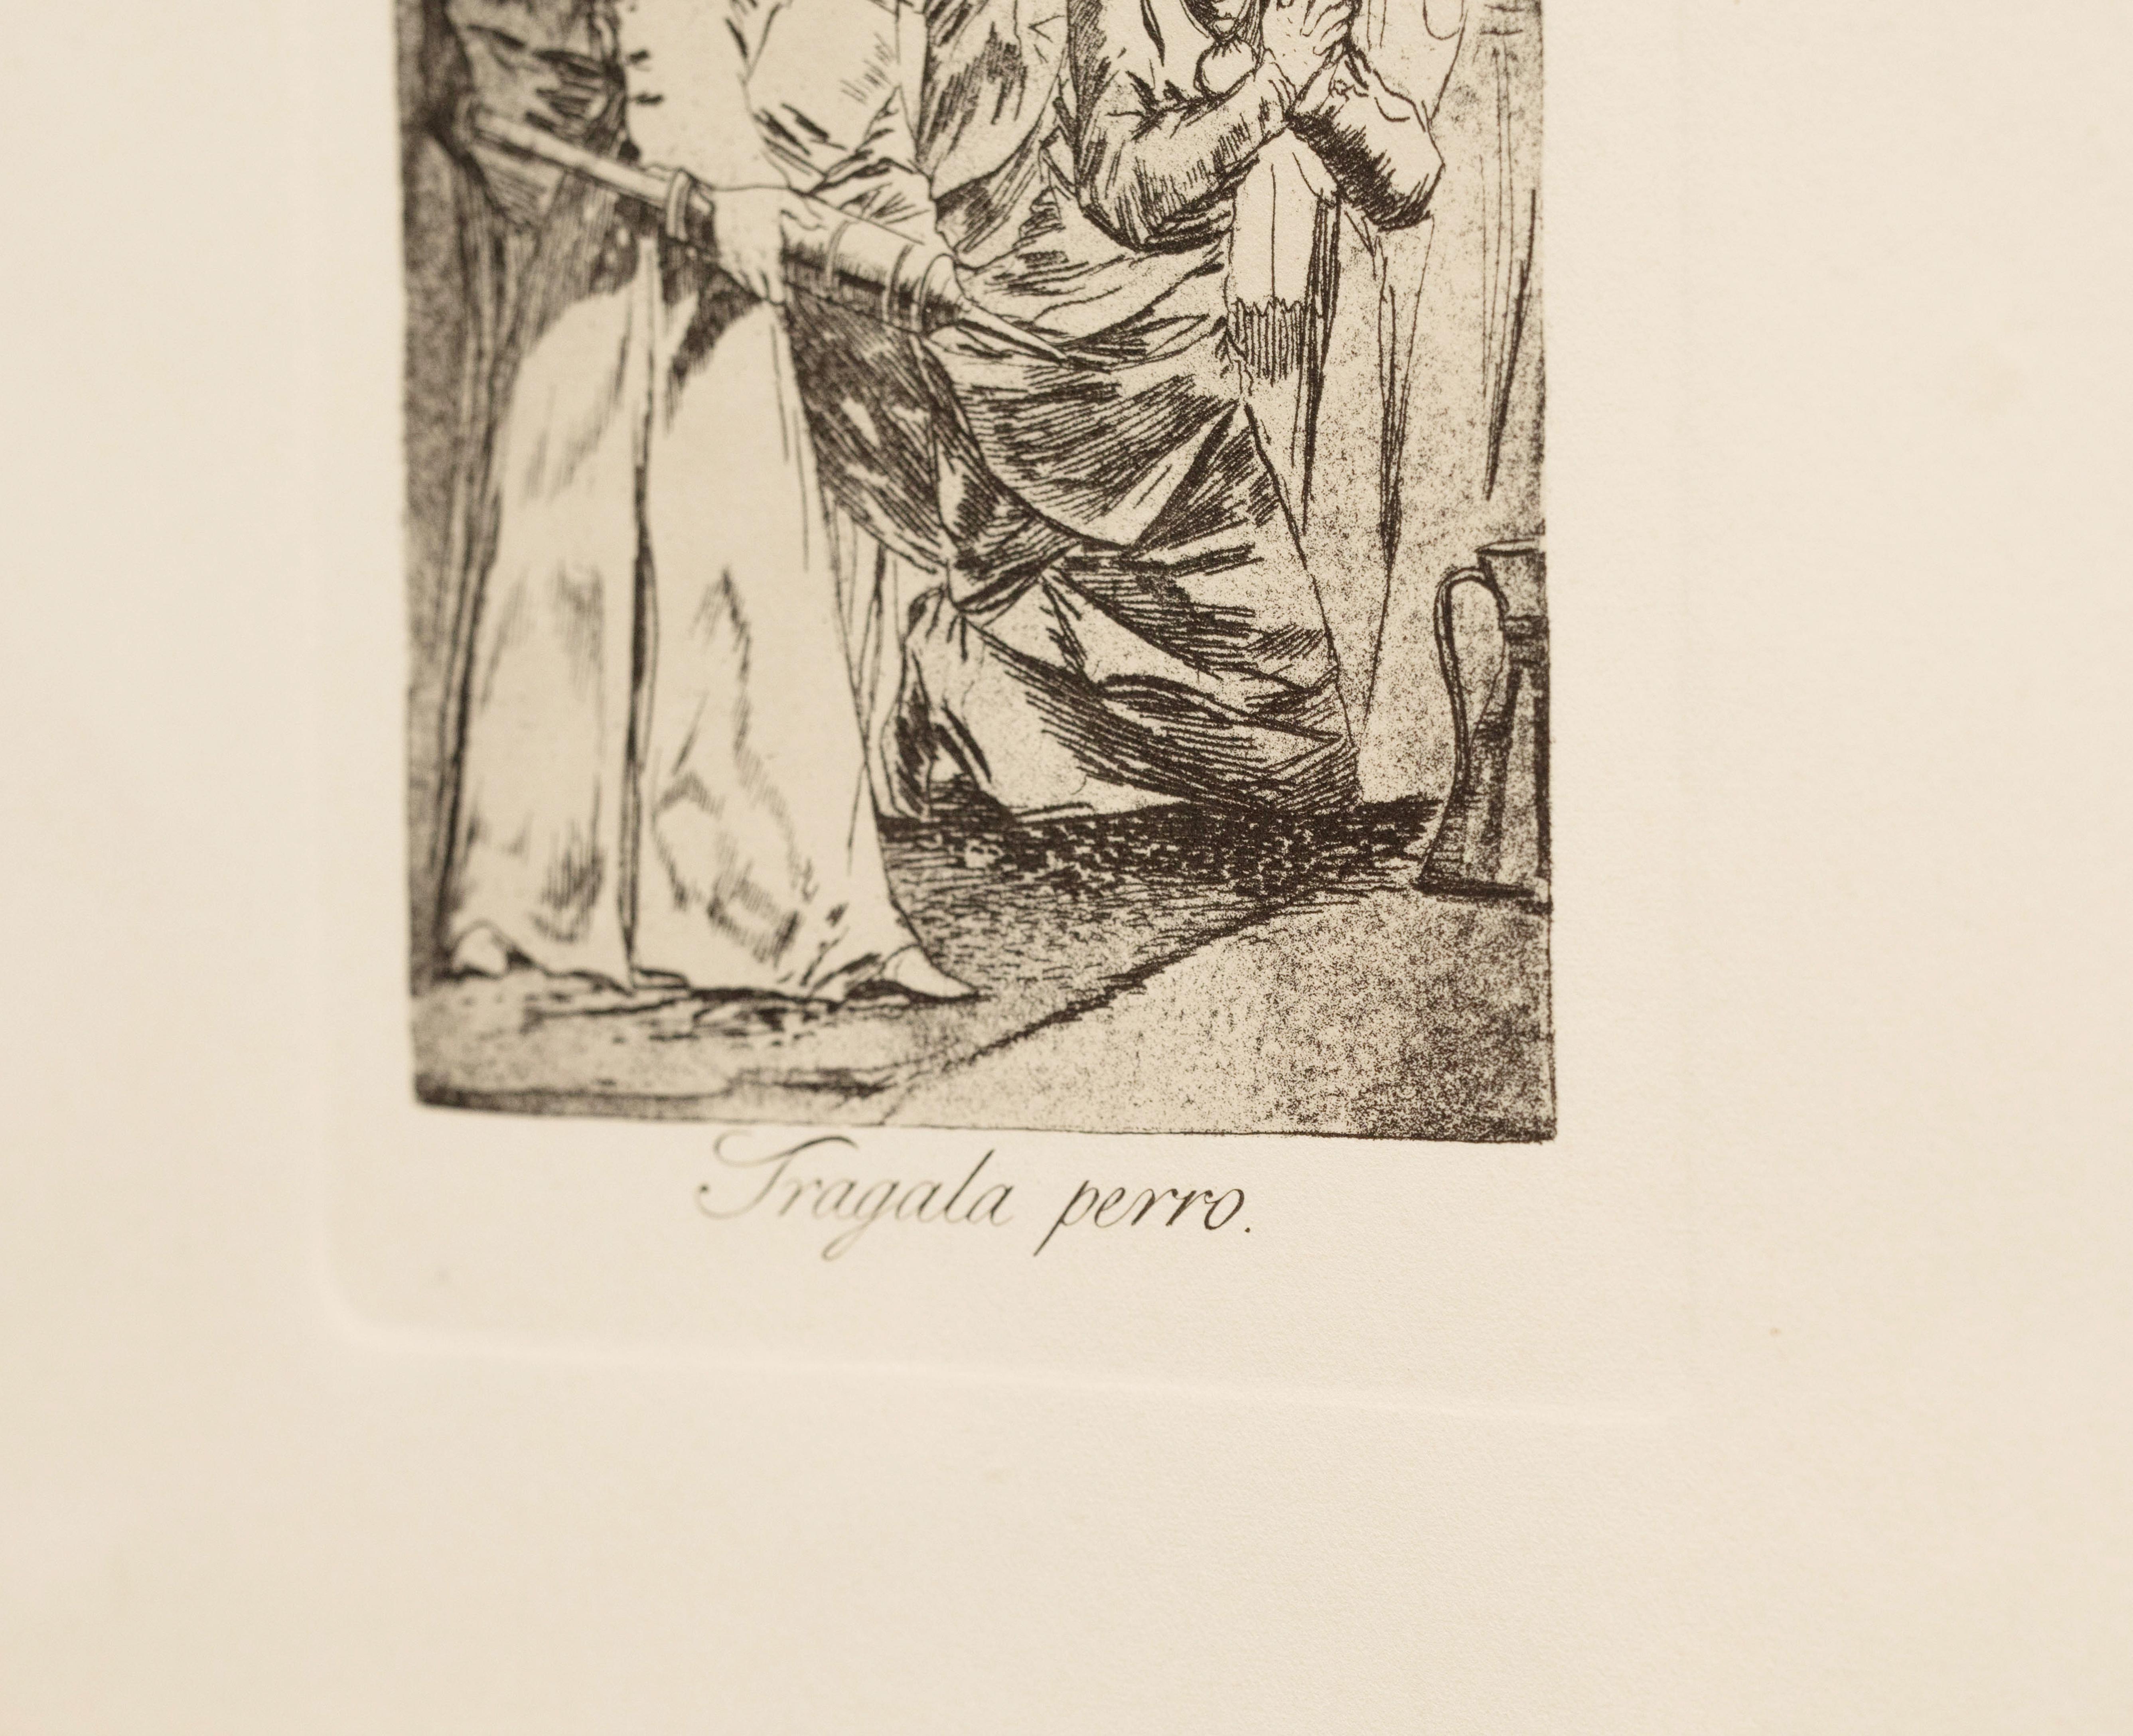 Goyas Radierung Tragala Perro 1797-1799 für das Prado-Museum in Madrid (Glas) im Angebot